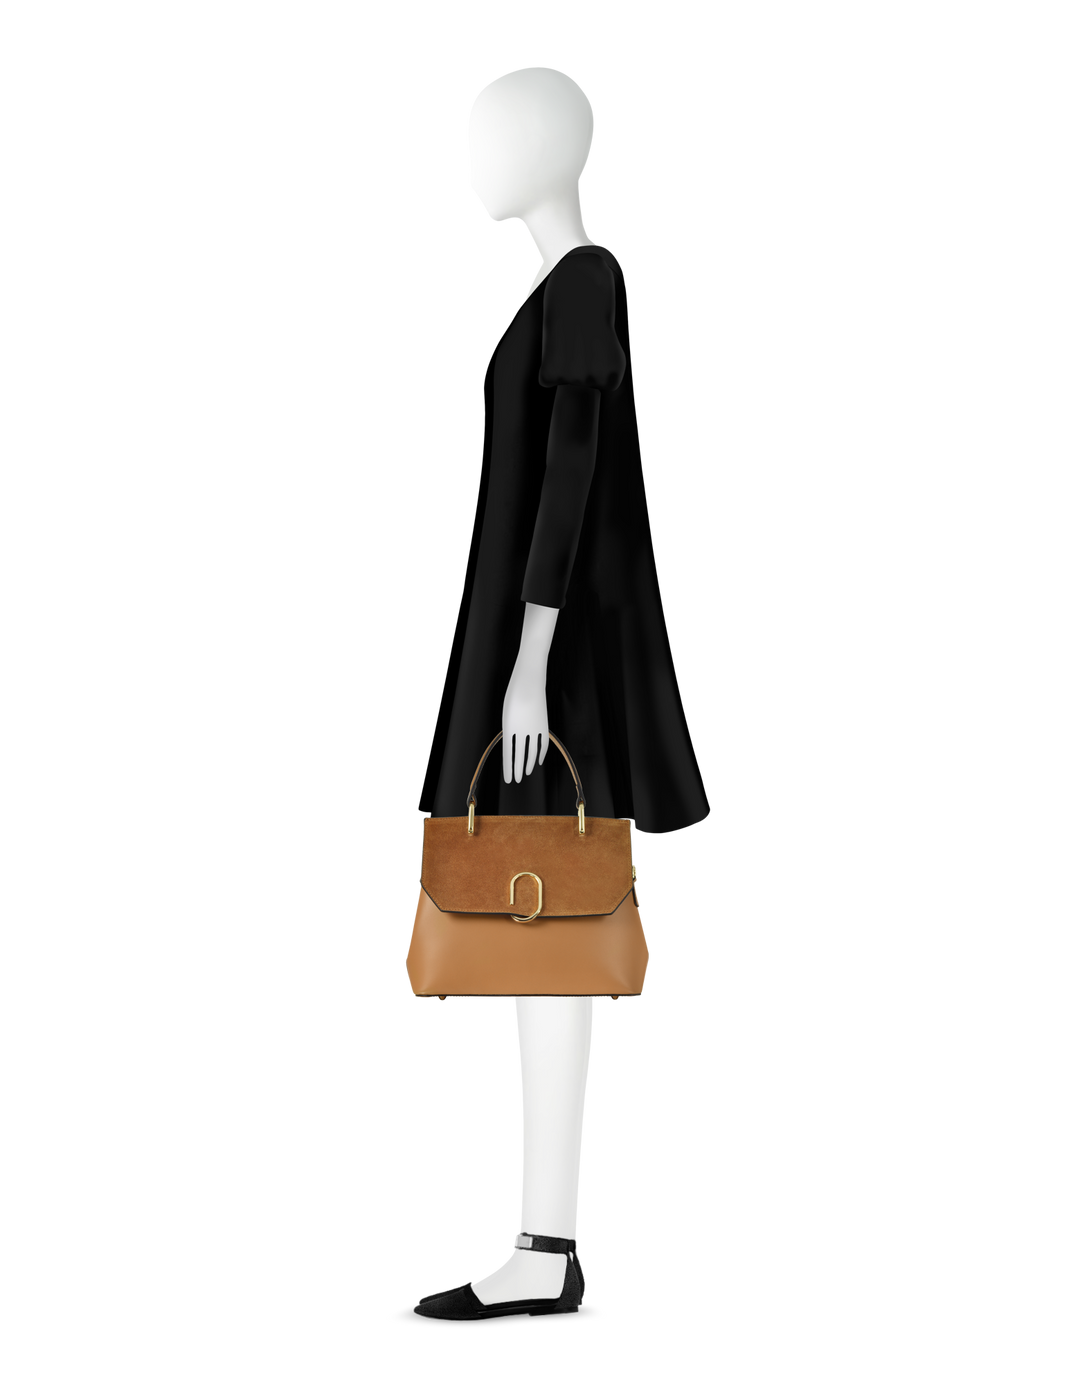 Side view of mannequin in black dress holding brown handbag